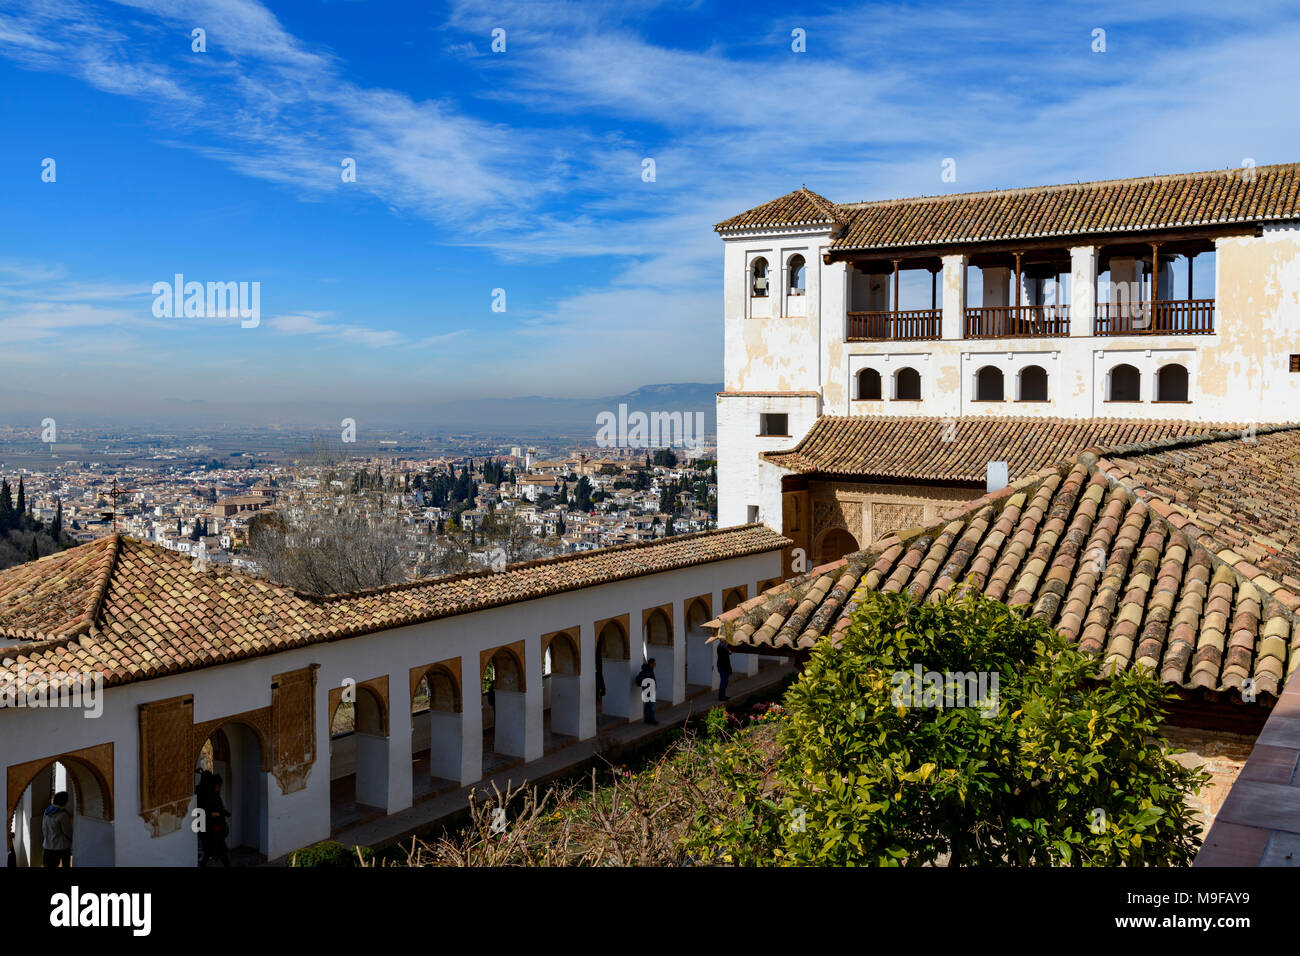 Generalife Palace (Palacio del Generalife) in La Alhambra, Granada, Spain Stock Photo